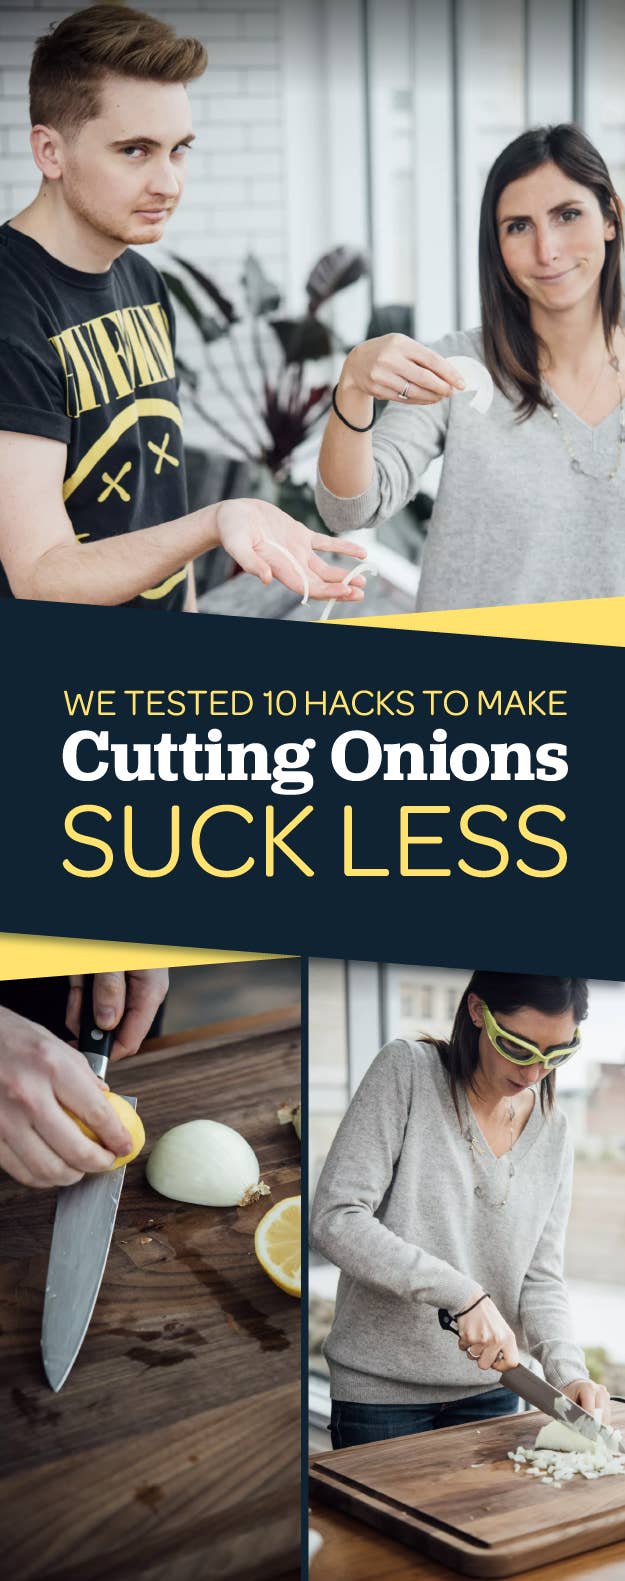 Onion cutting glasses against tear tearing